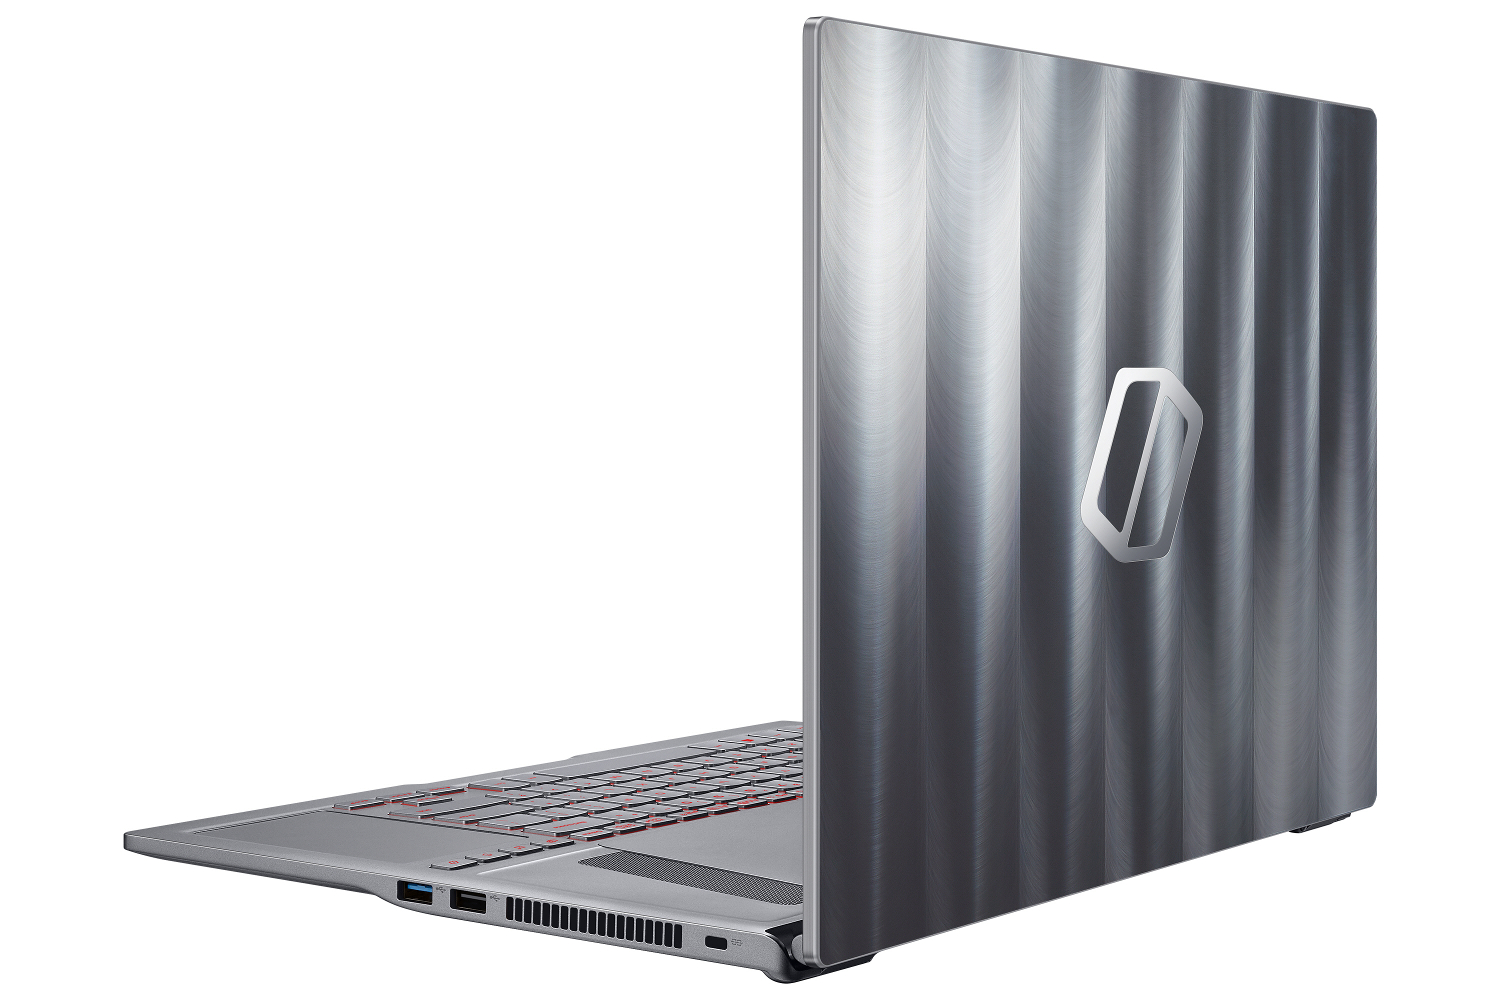 samsung thin odyssey z laptop latest intel core cpu notebook